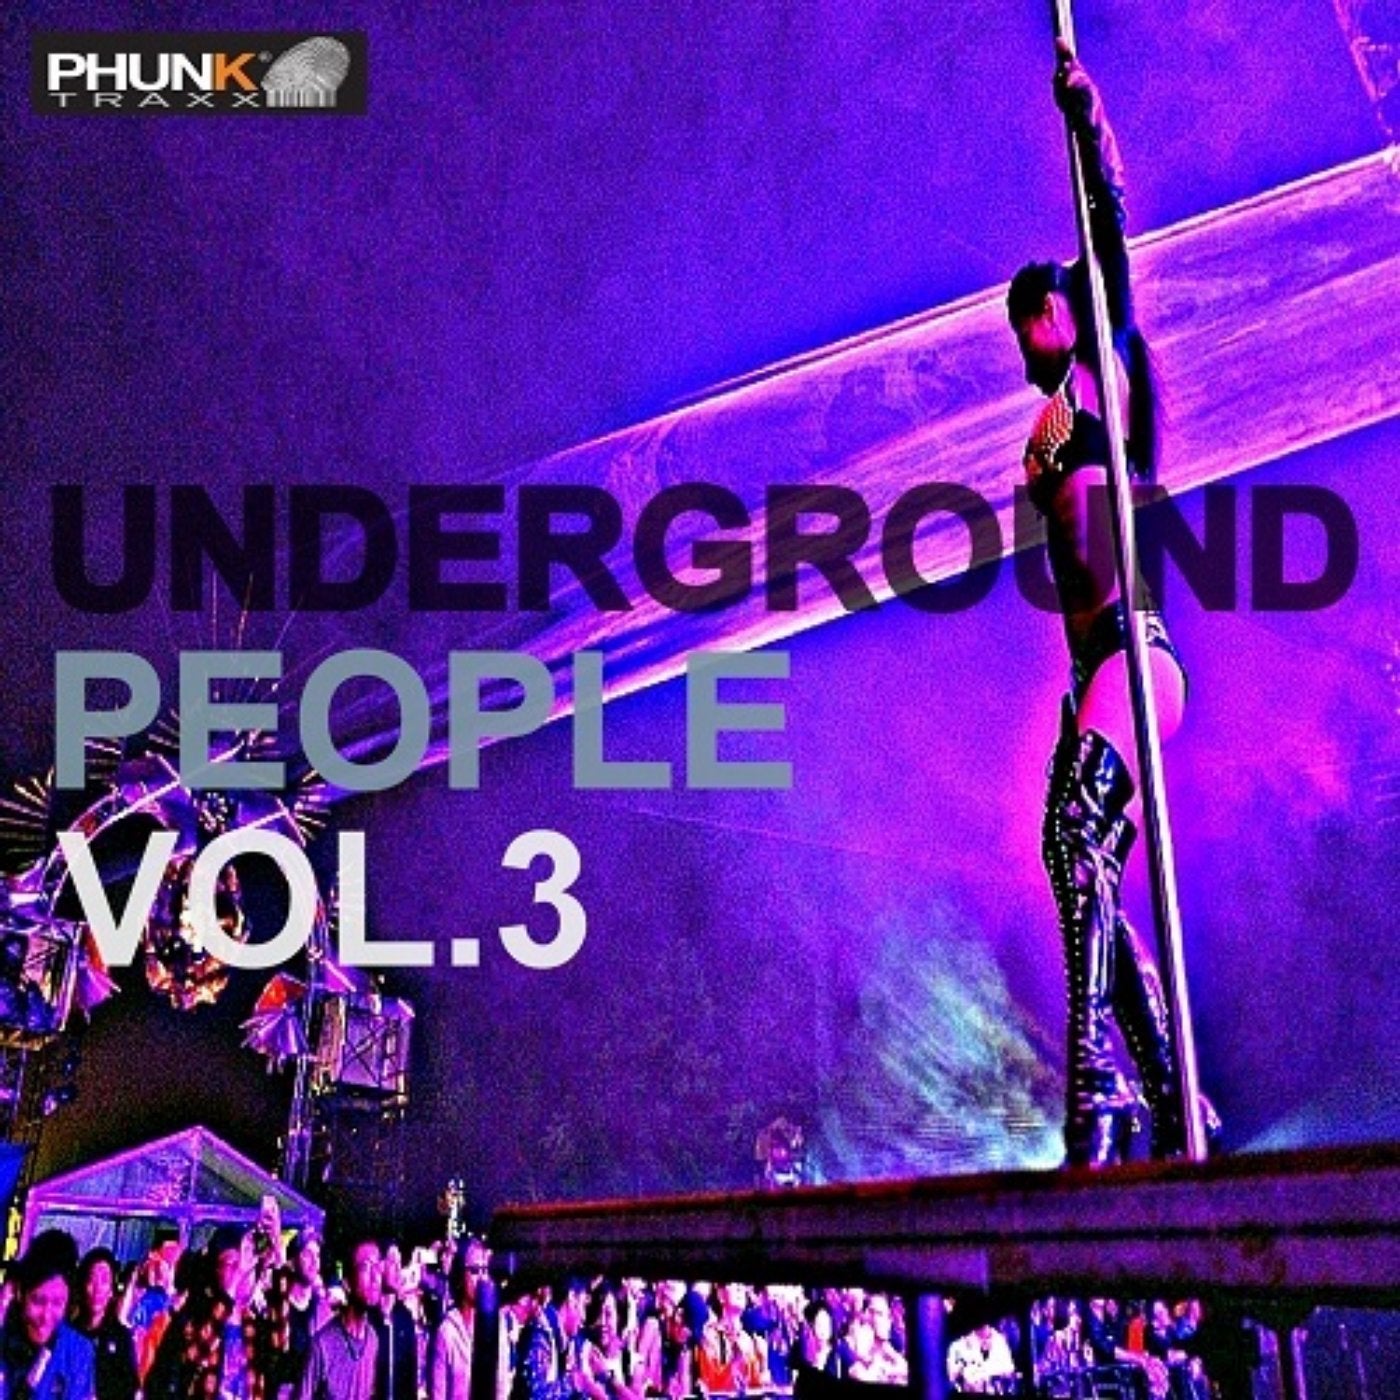 Underground People Vol.3